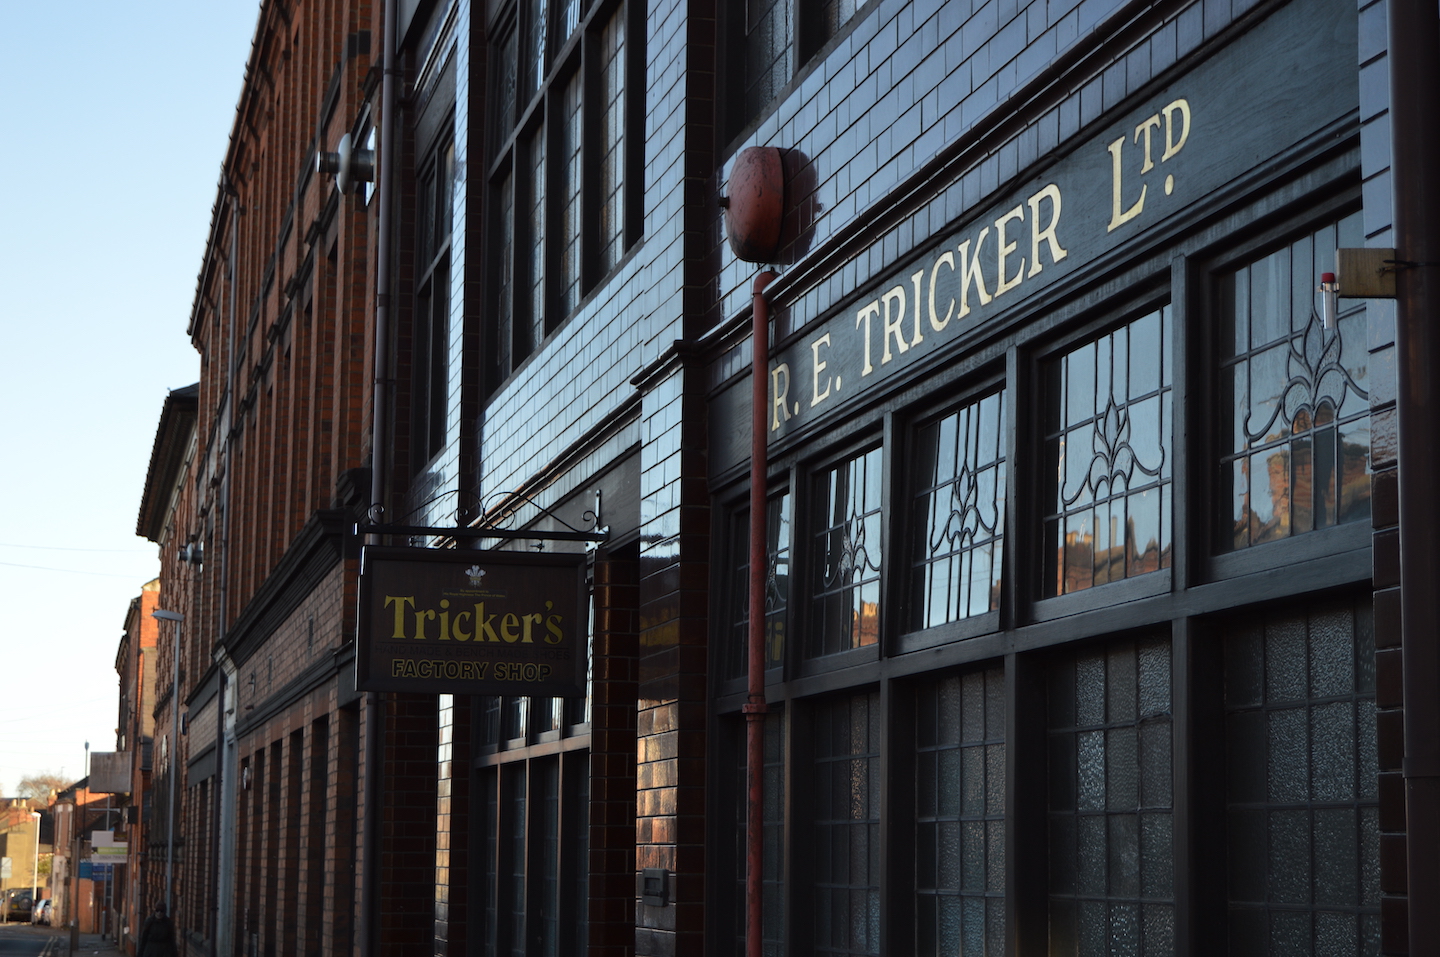 Trickers Shop - Working in Northampton